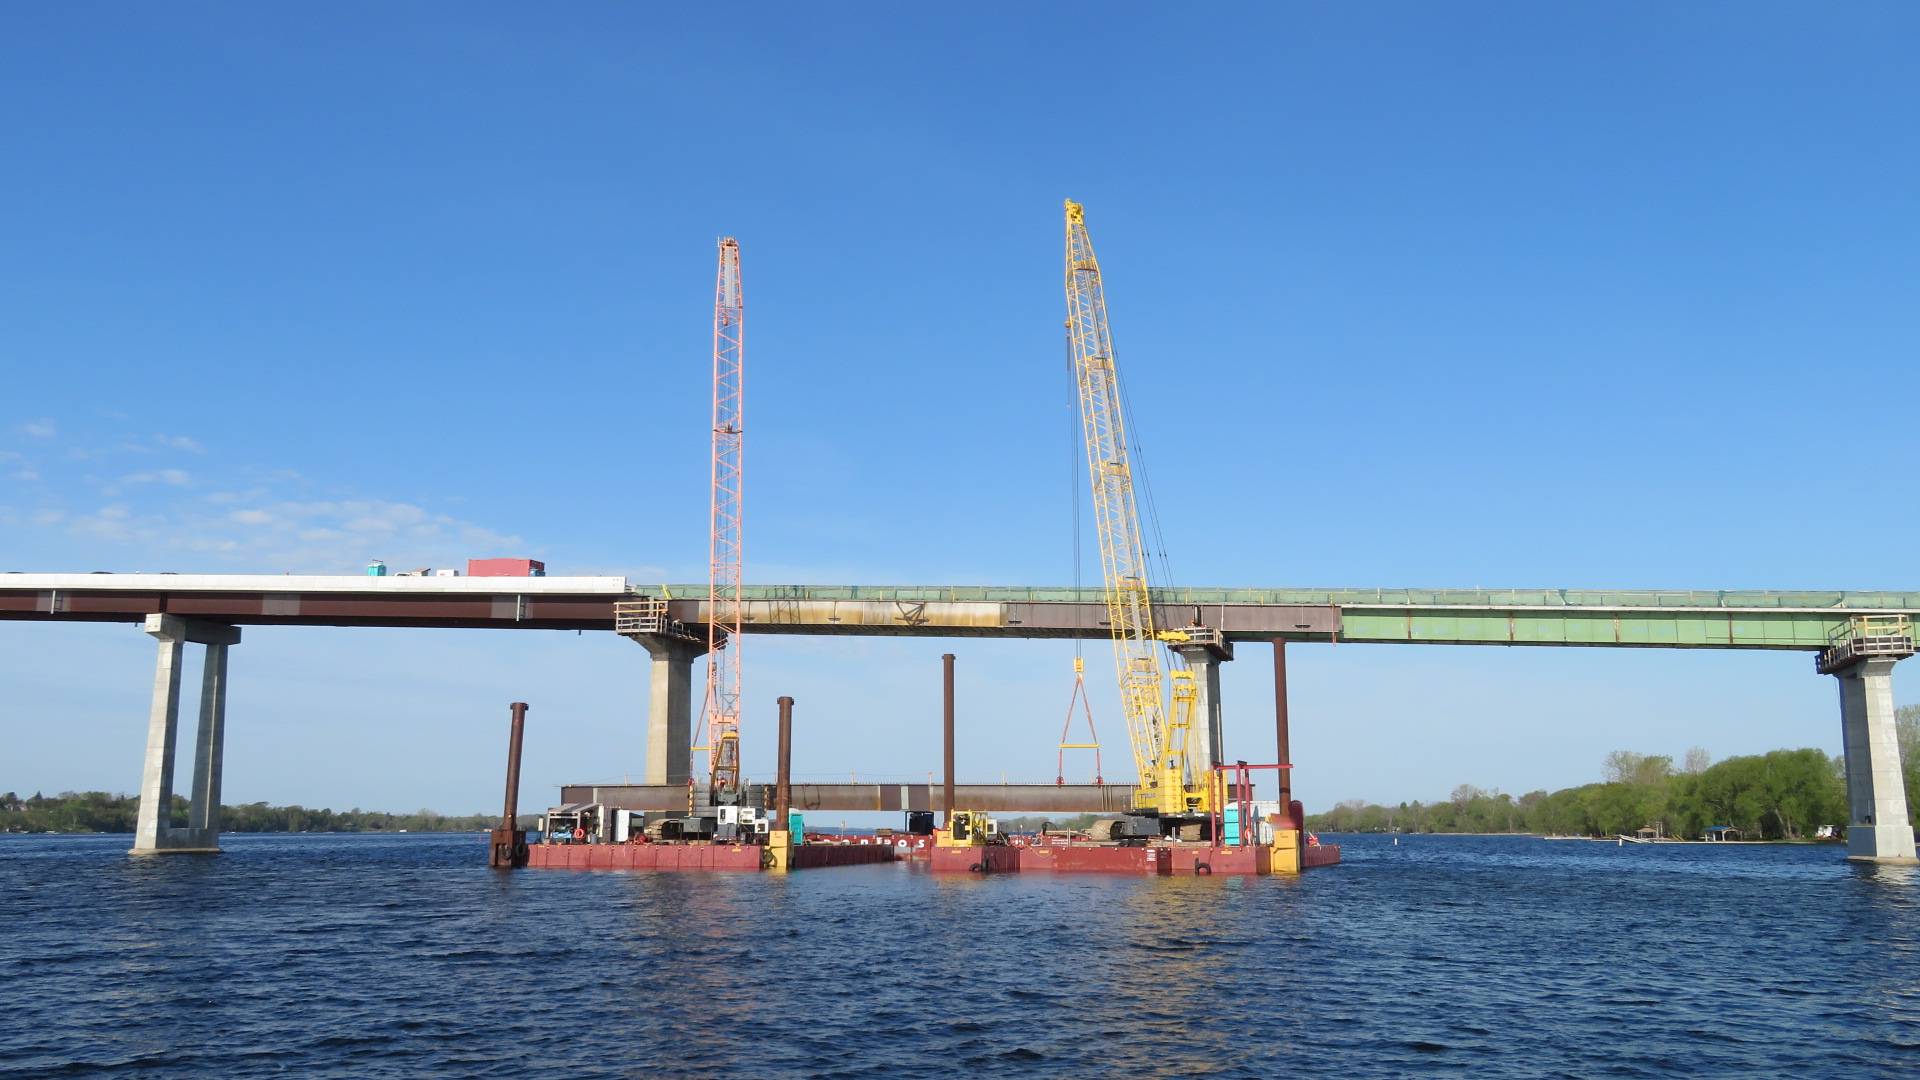 Both 200-ton cranes lifting the second girder